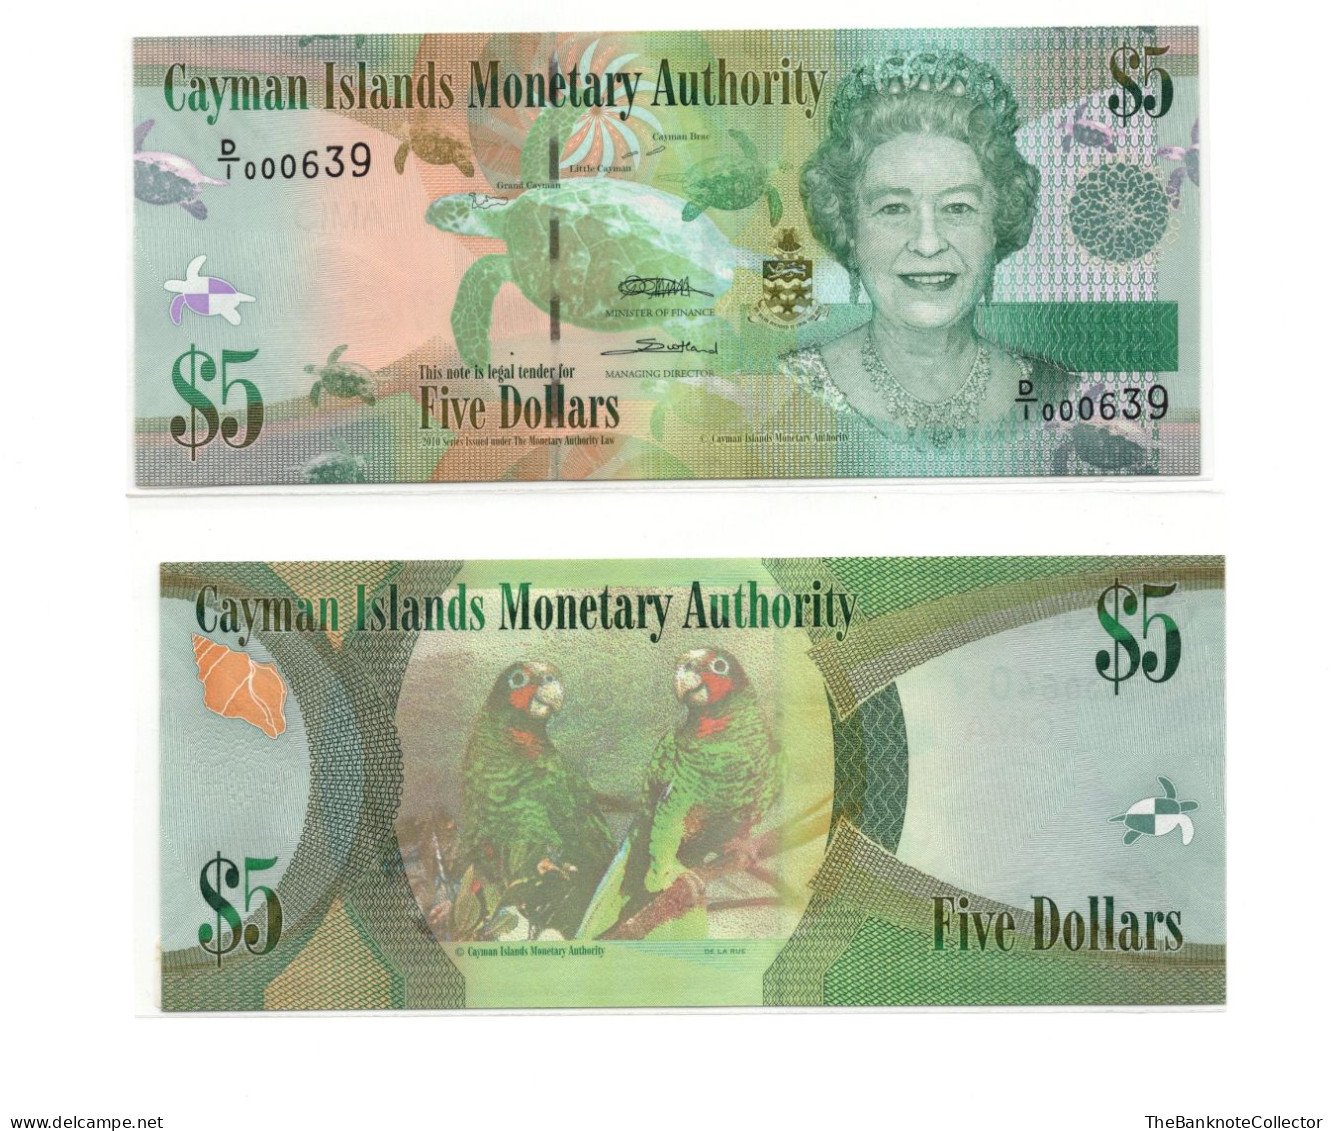 Cayman Islands 5 Dollars 2010 QEII P-39 UNC Low Serial Number - Cayman Islands